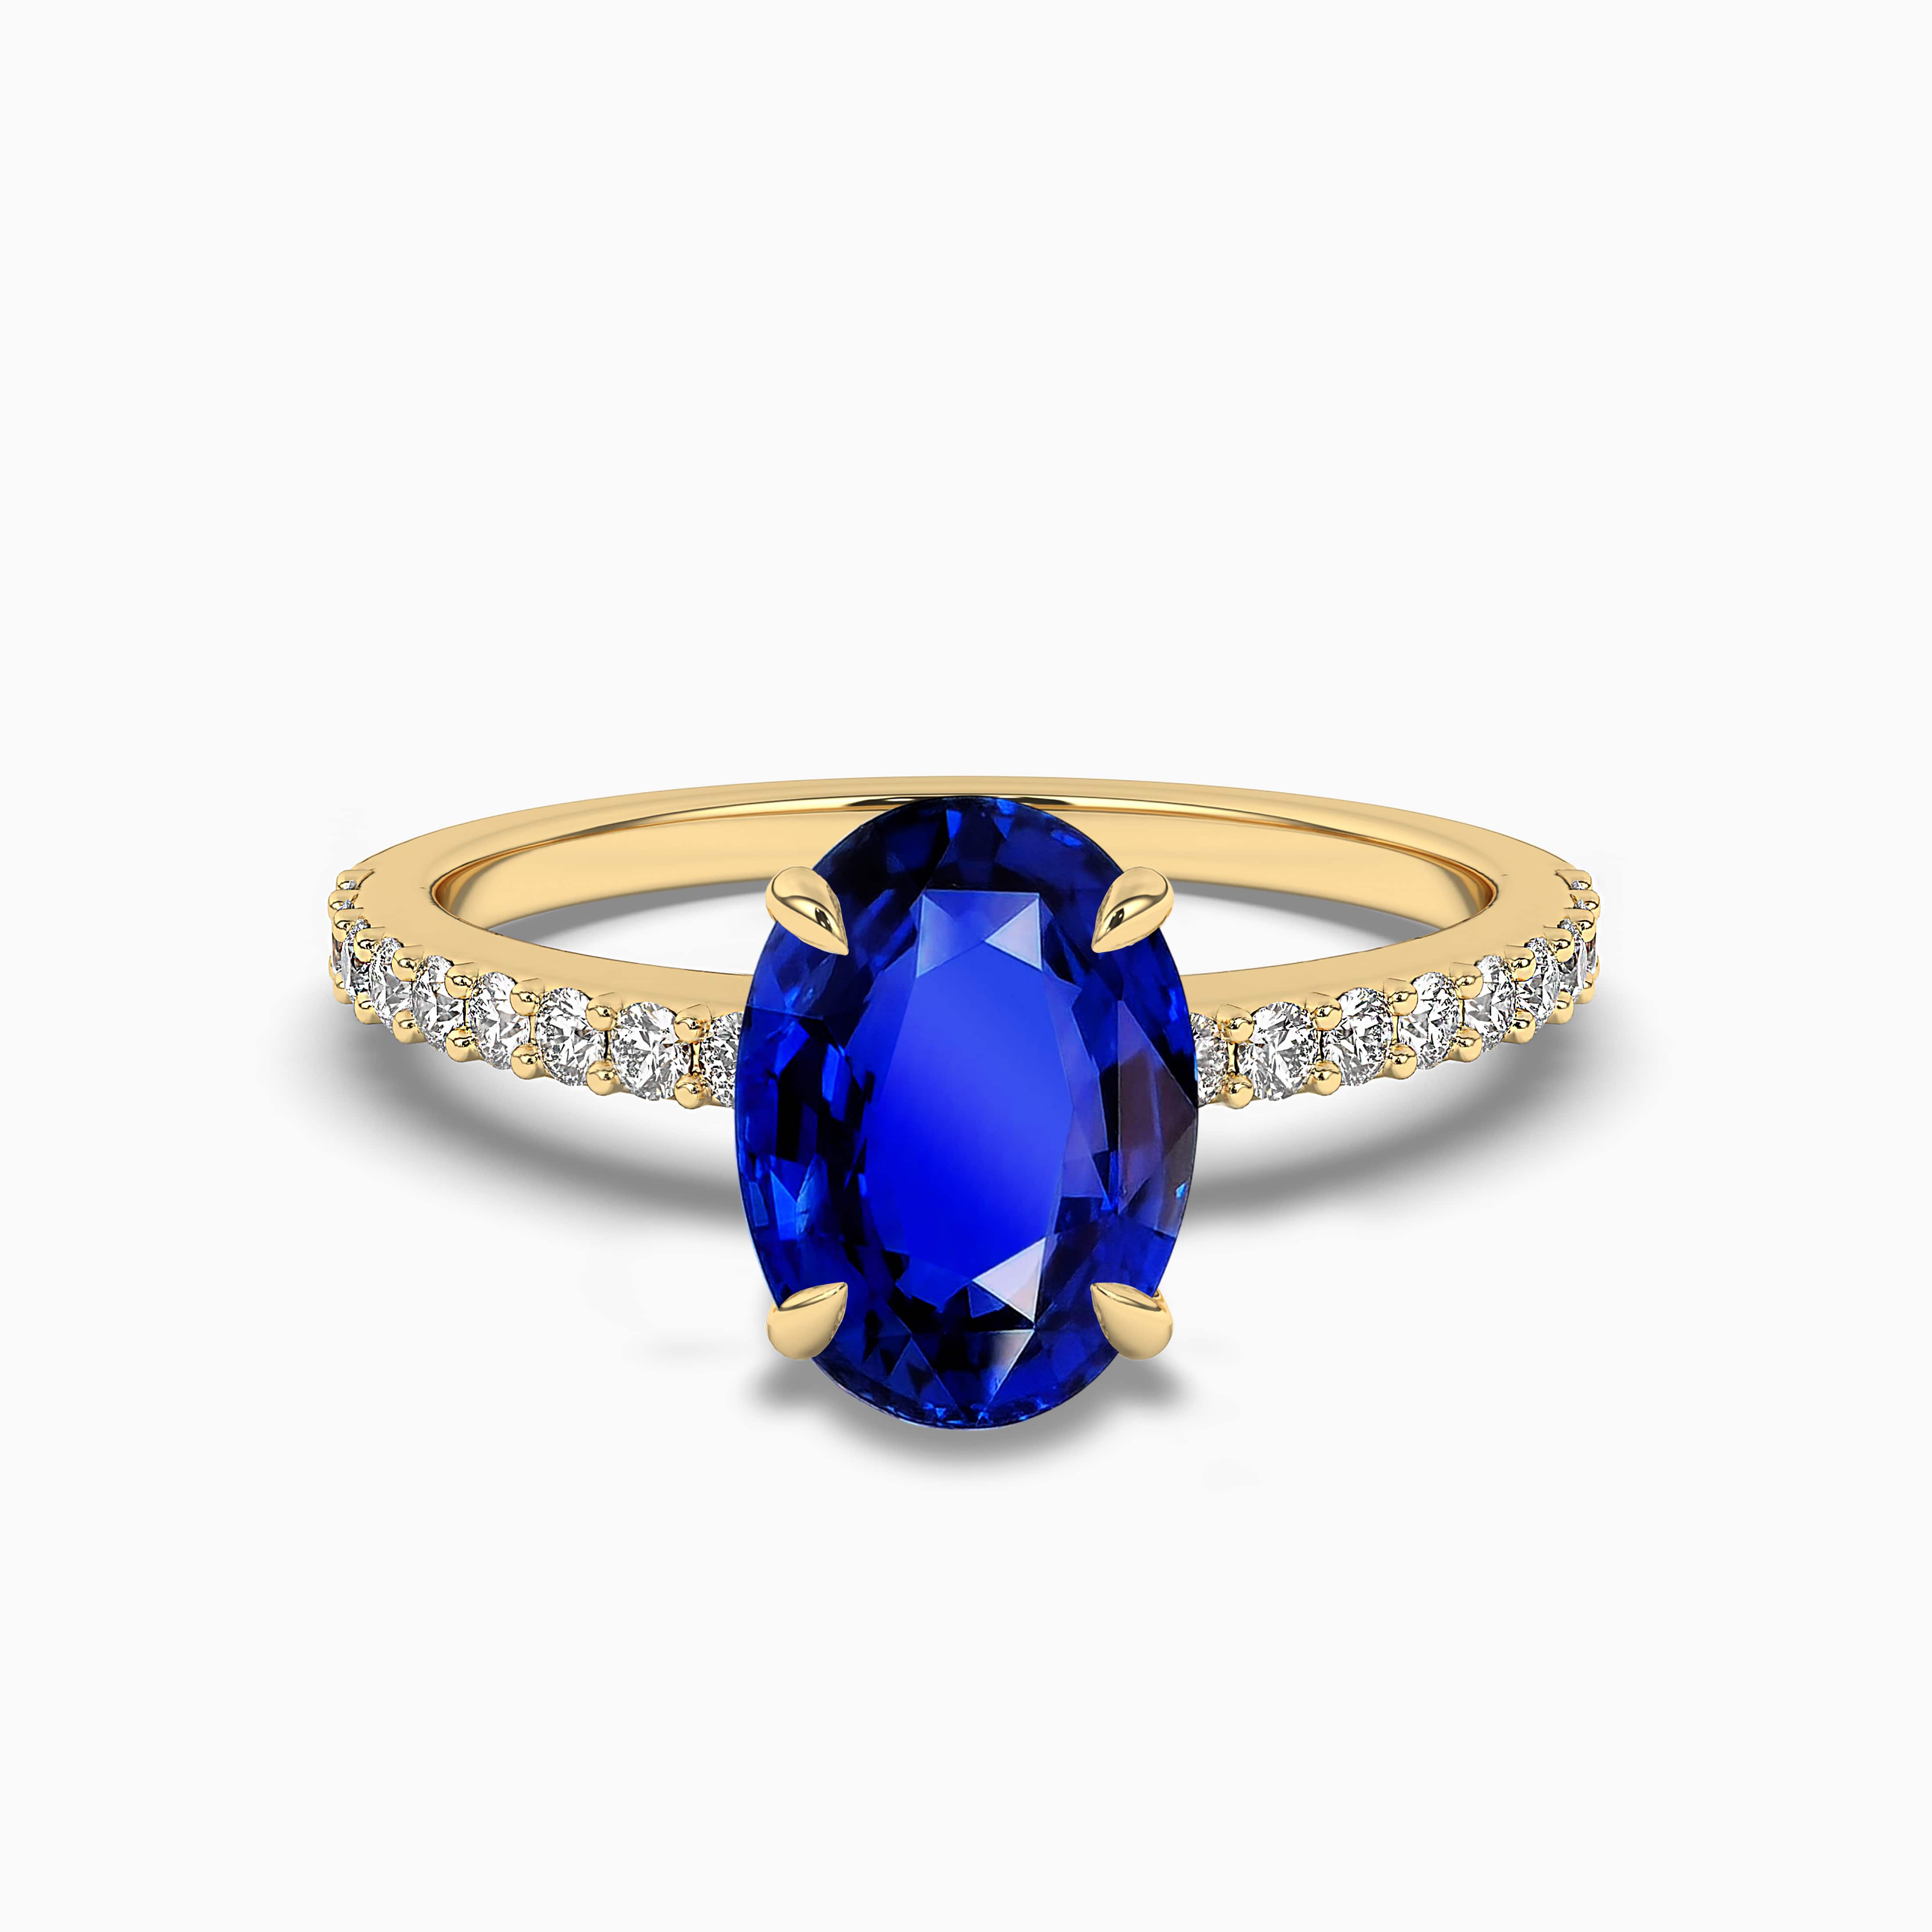 CUSHION CUT BLUE SAPPHIRE & DIAMOND ENGAGEMENT RING YELLOW GOLD